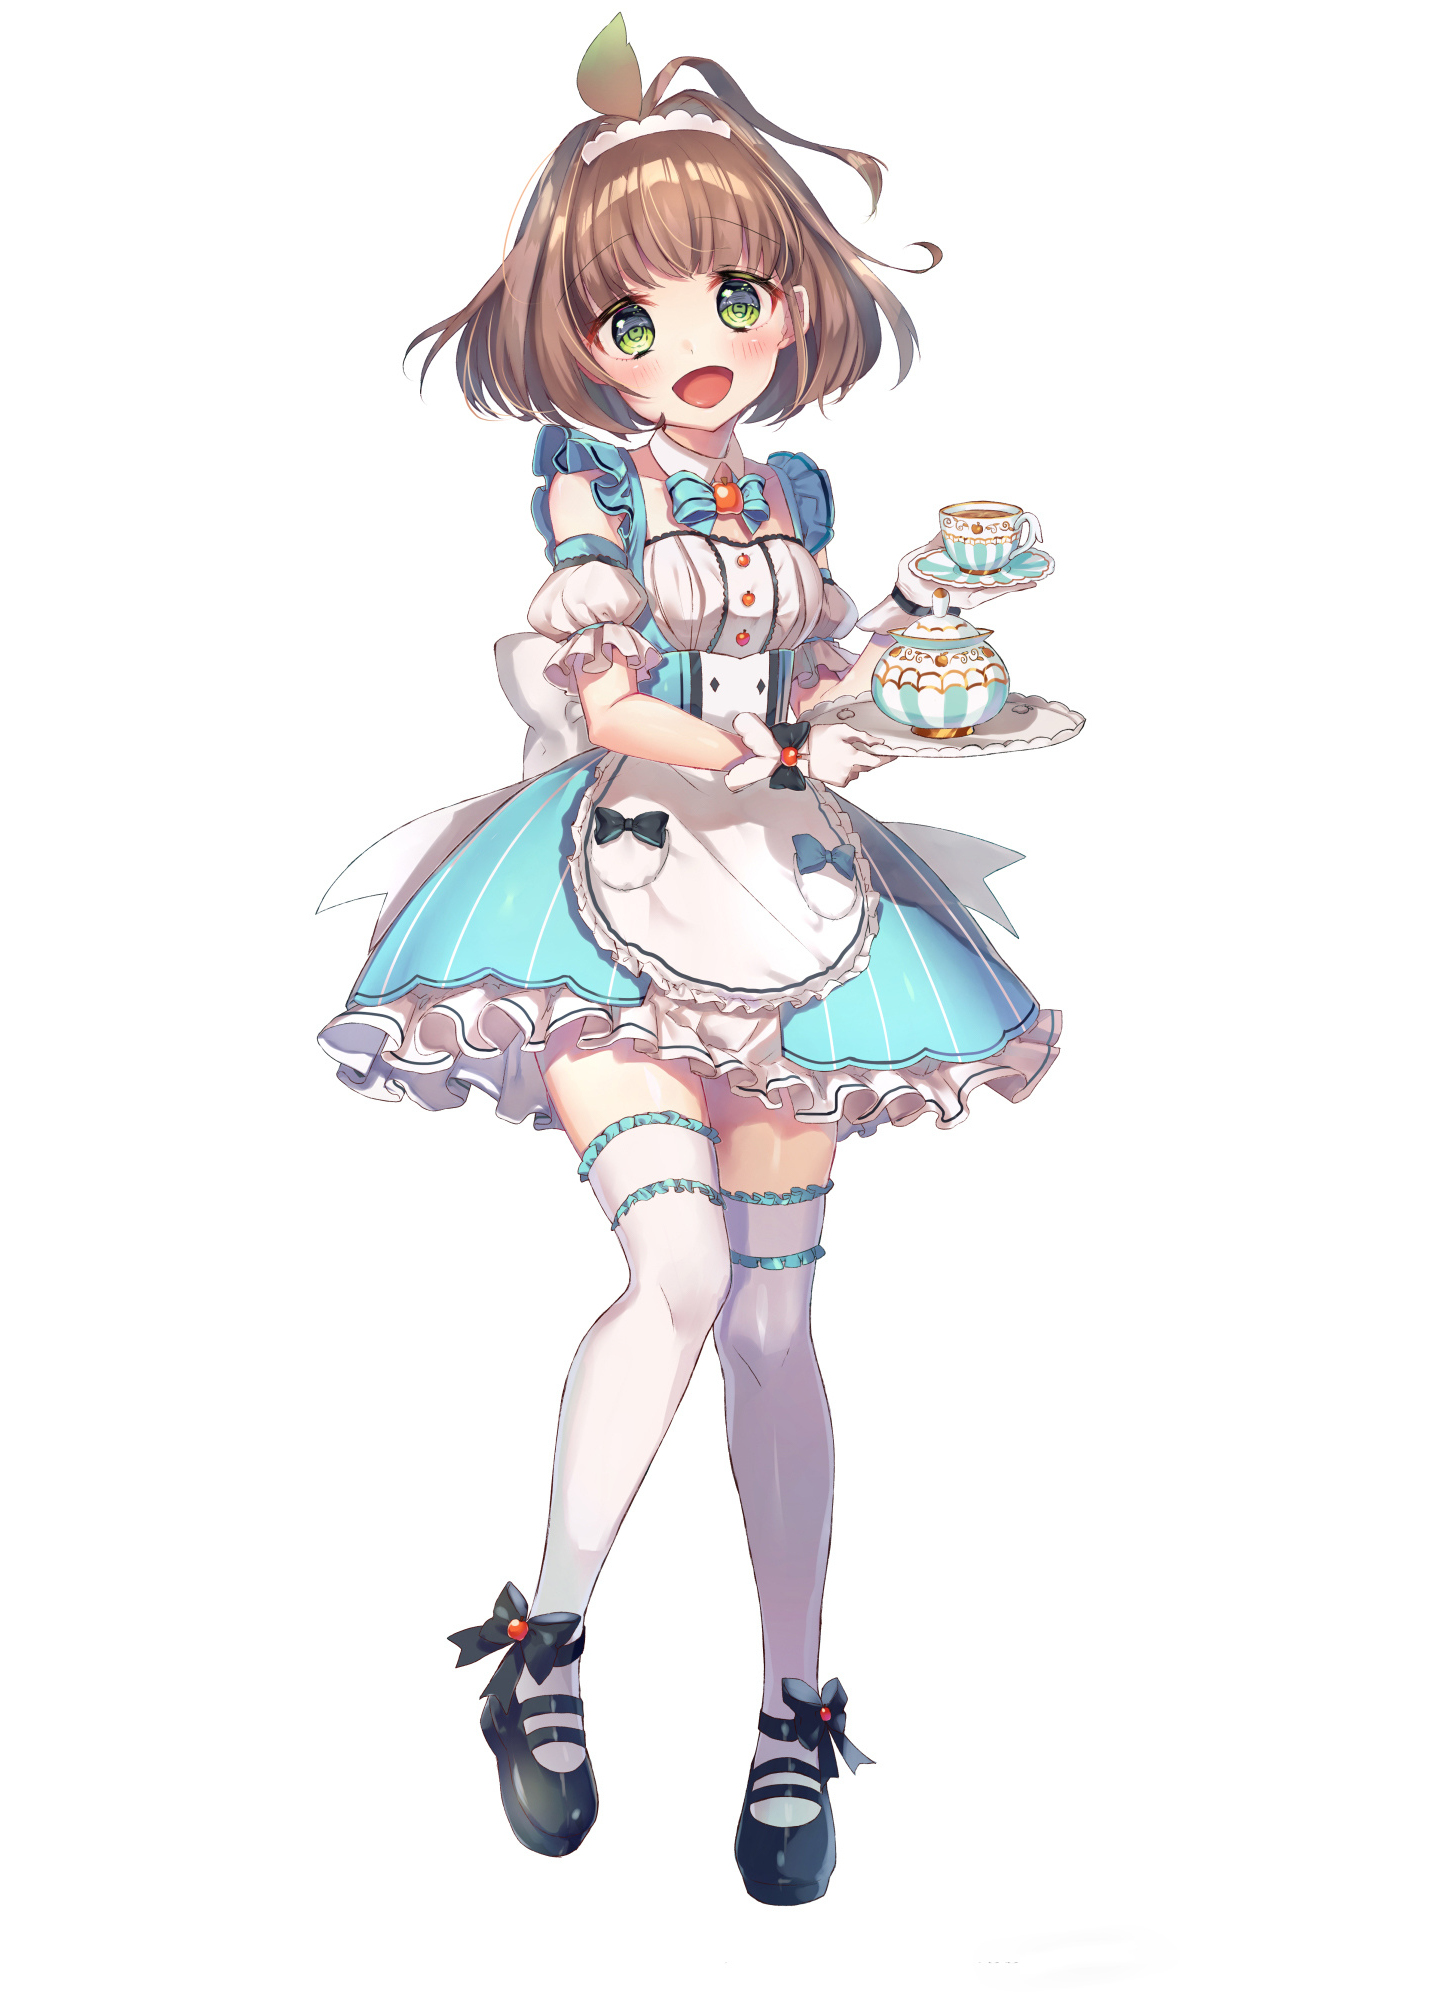 Weri Original Characters Anime Girls Maid Maid Outfit Wallpaper -  Resolution:1200x1678 - ID:1320182 - wallha.com